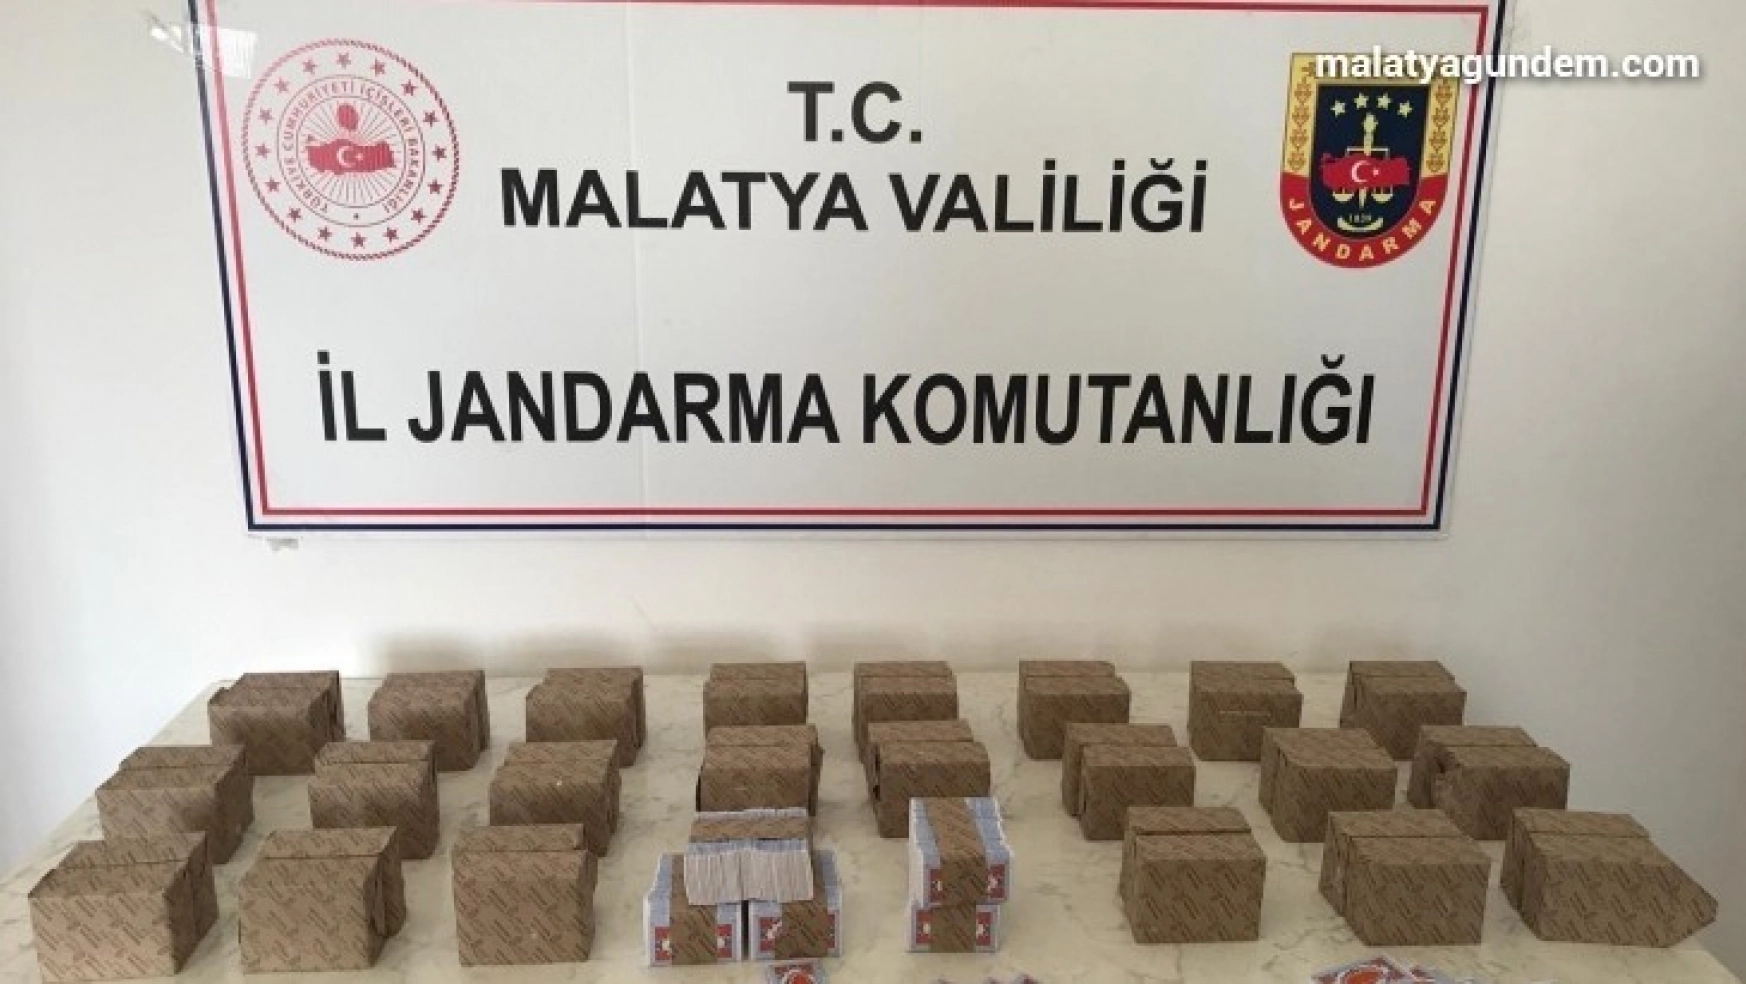 Malatya'da 2 bin 250 deste bandrolsüz sigara kağıdı yakalandı